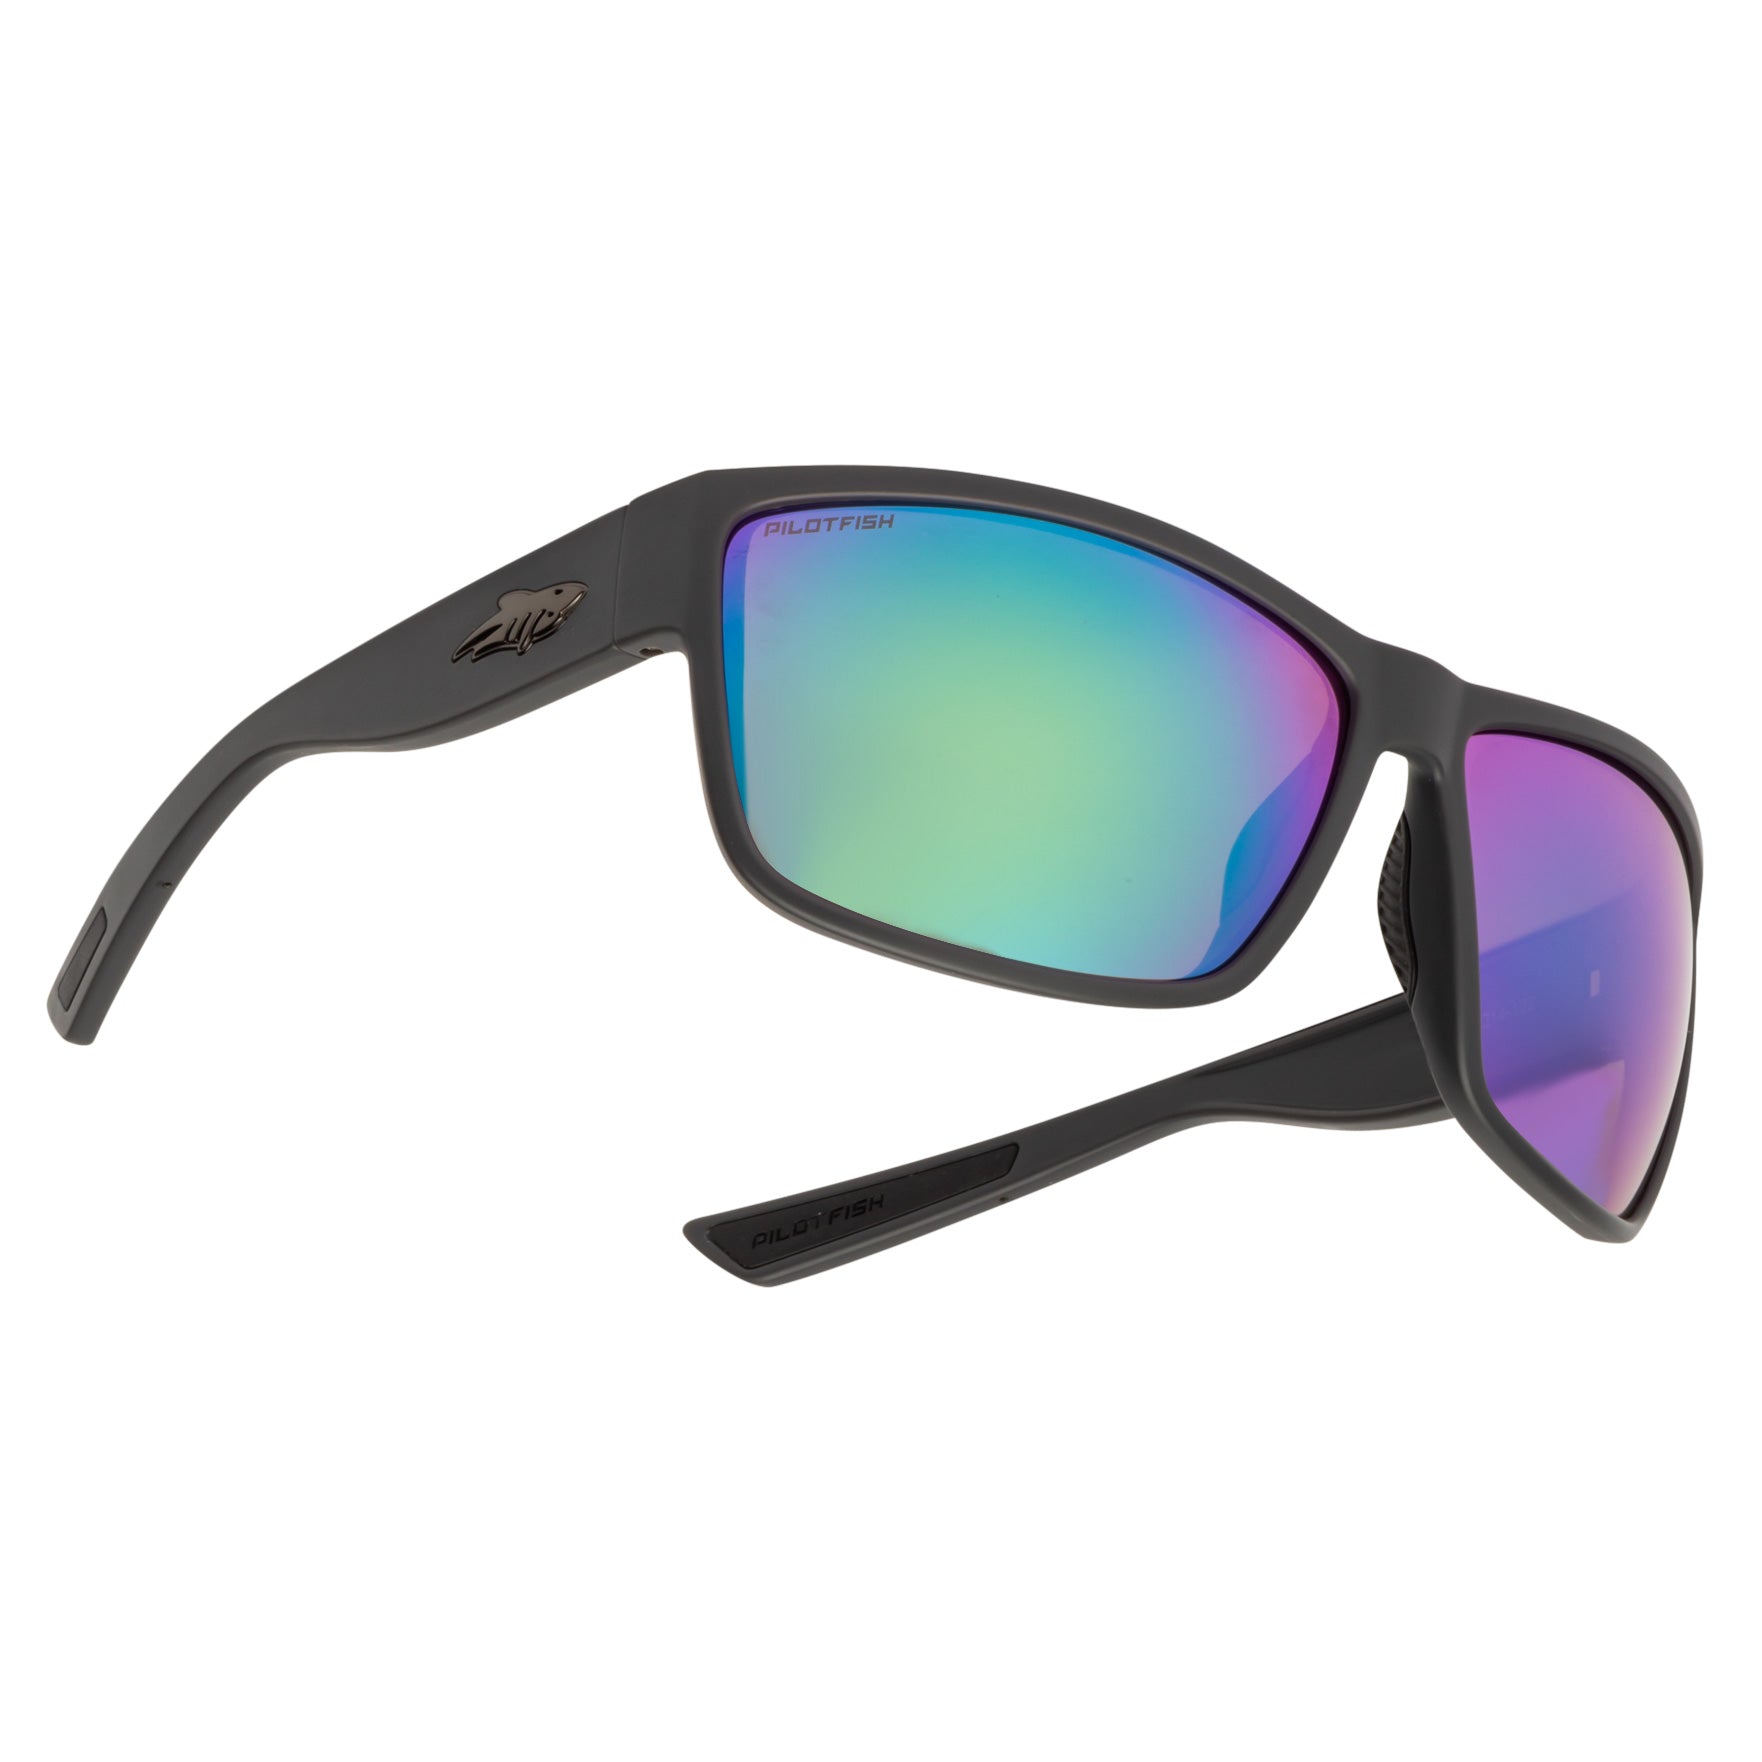 Pilotfish Eyewear Retainers  No-Tail Adjustable Sunglasses Straps